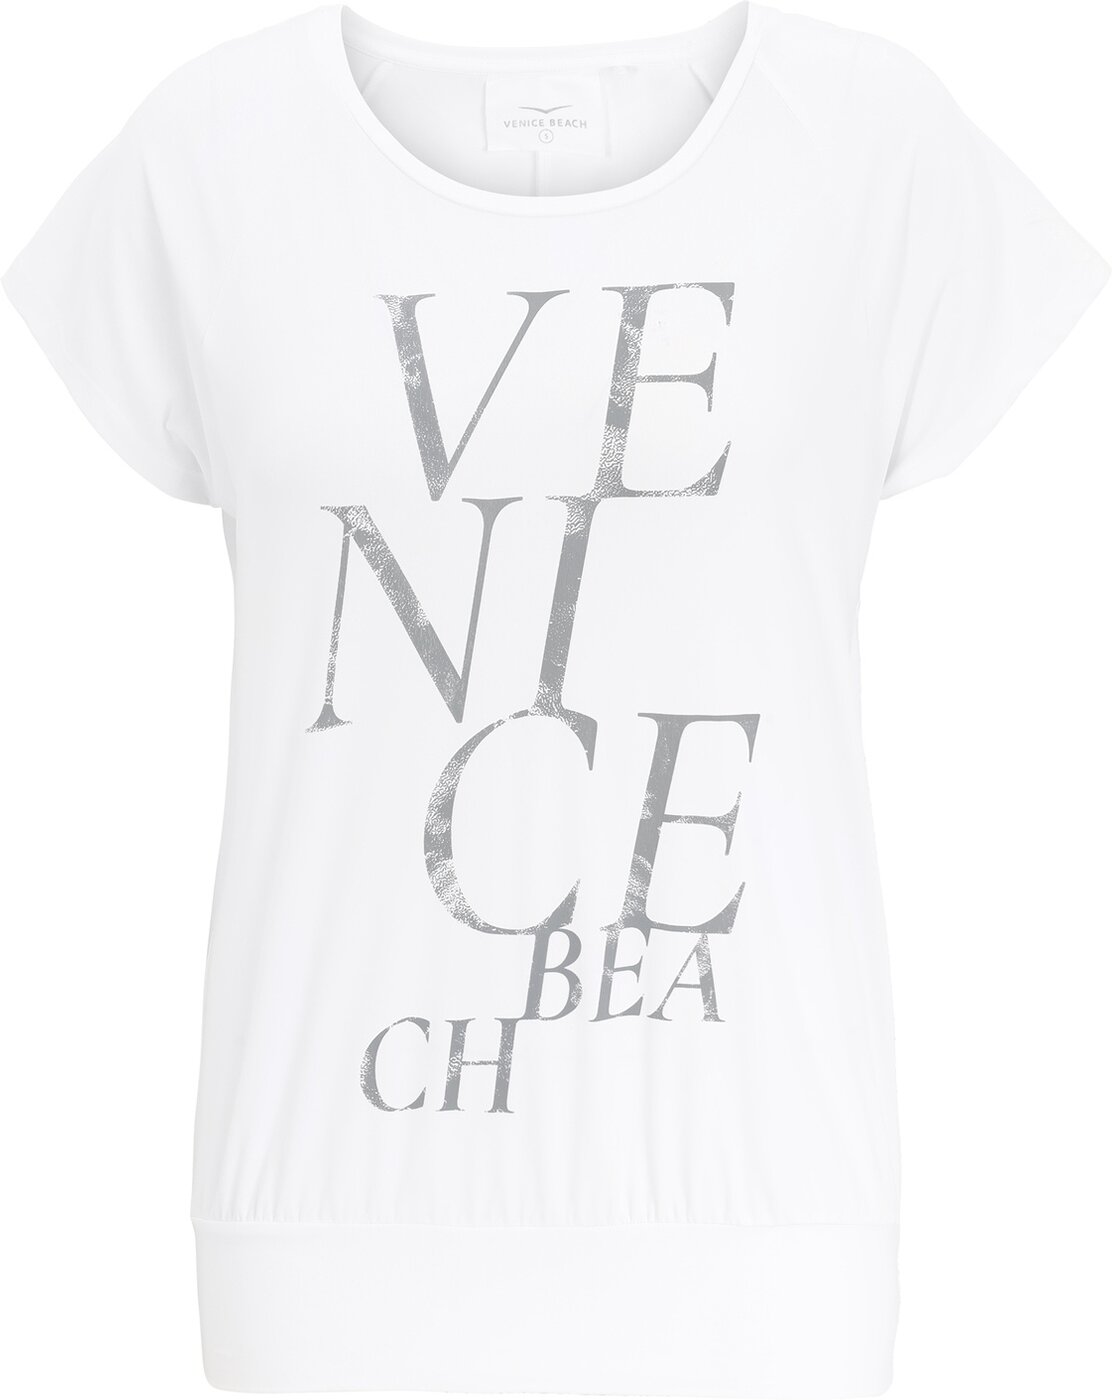 Venice Beach VB_Nobel DL T-Shirt 02 kaufen online